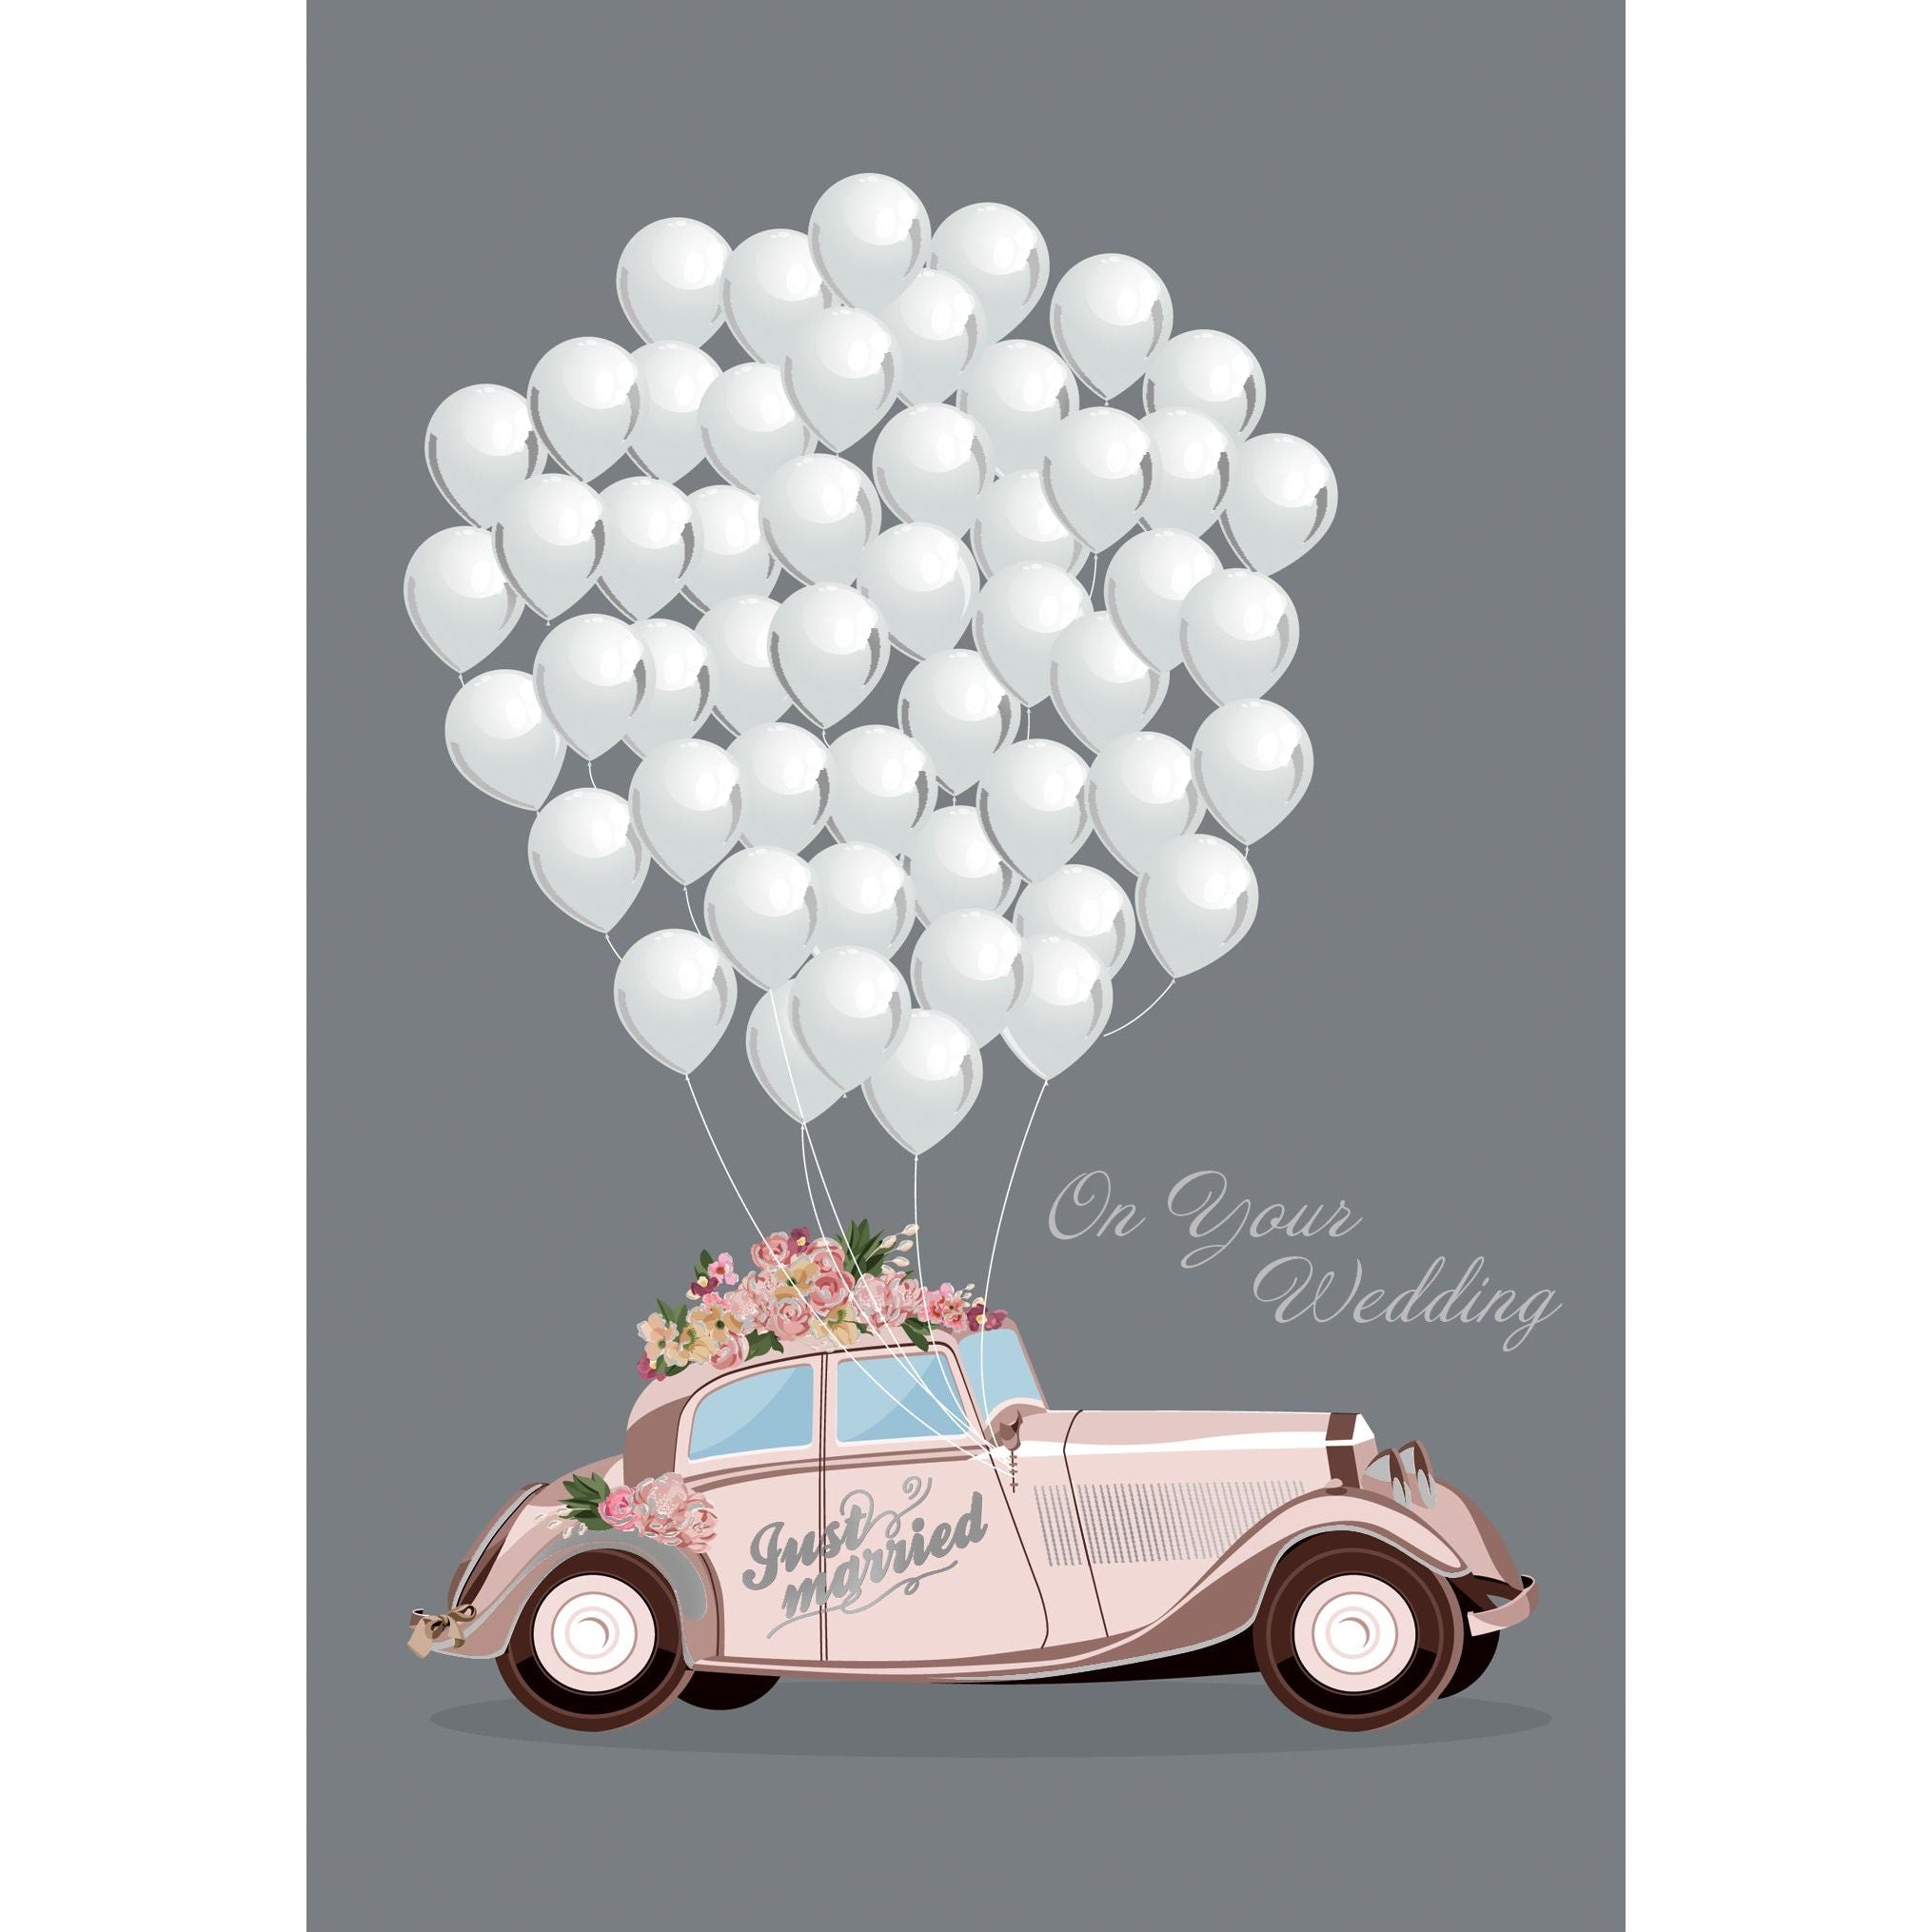  Just Married Banner & Wedding Balloons - Wedding Car